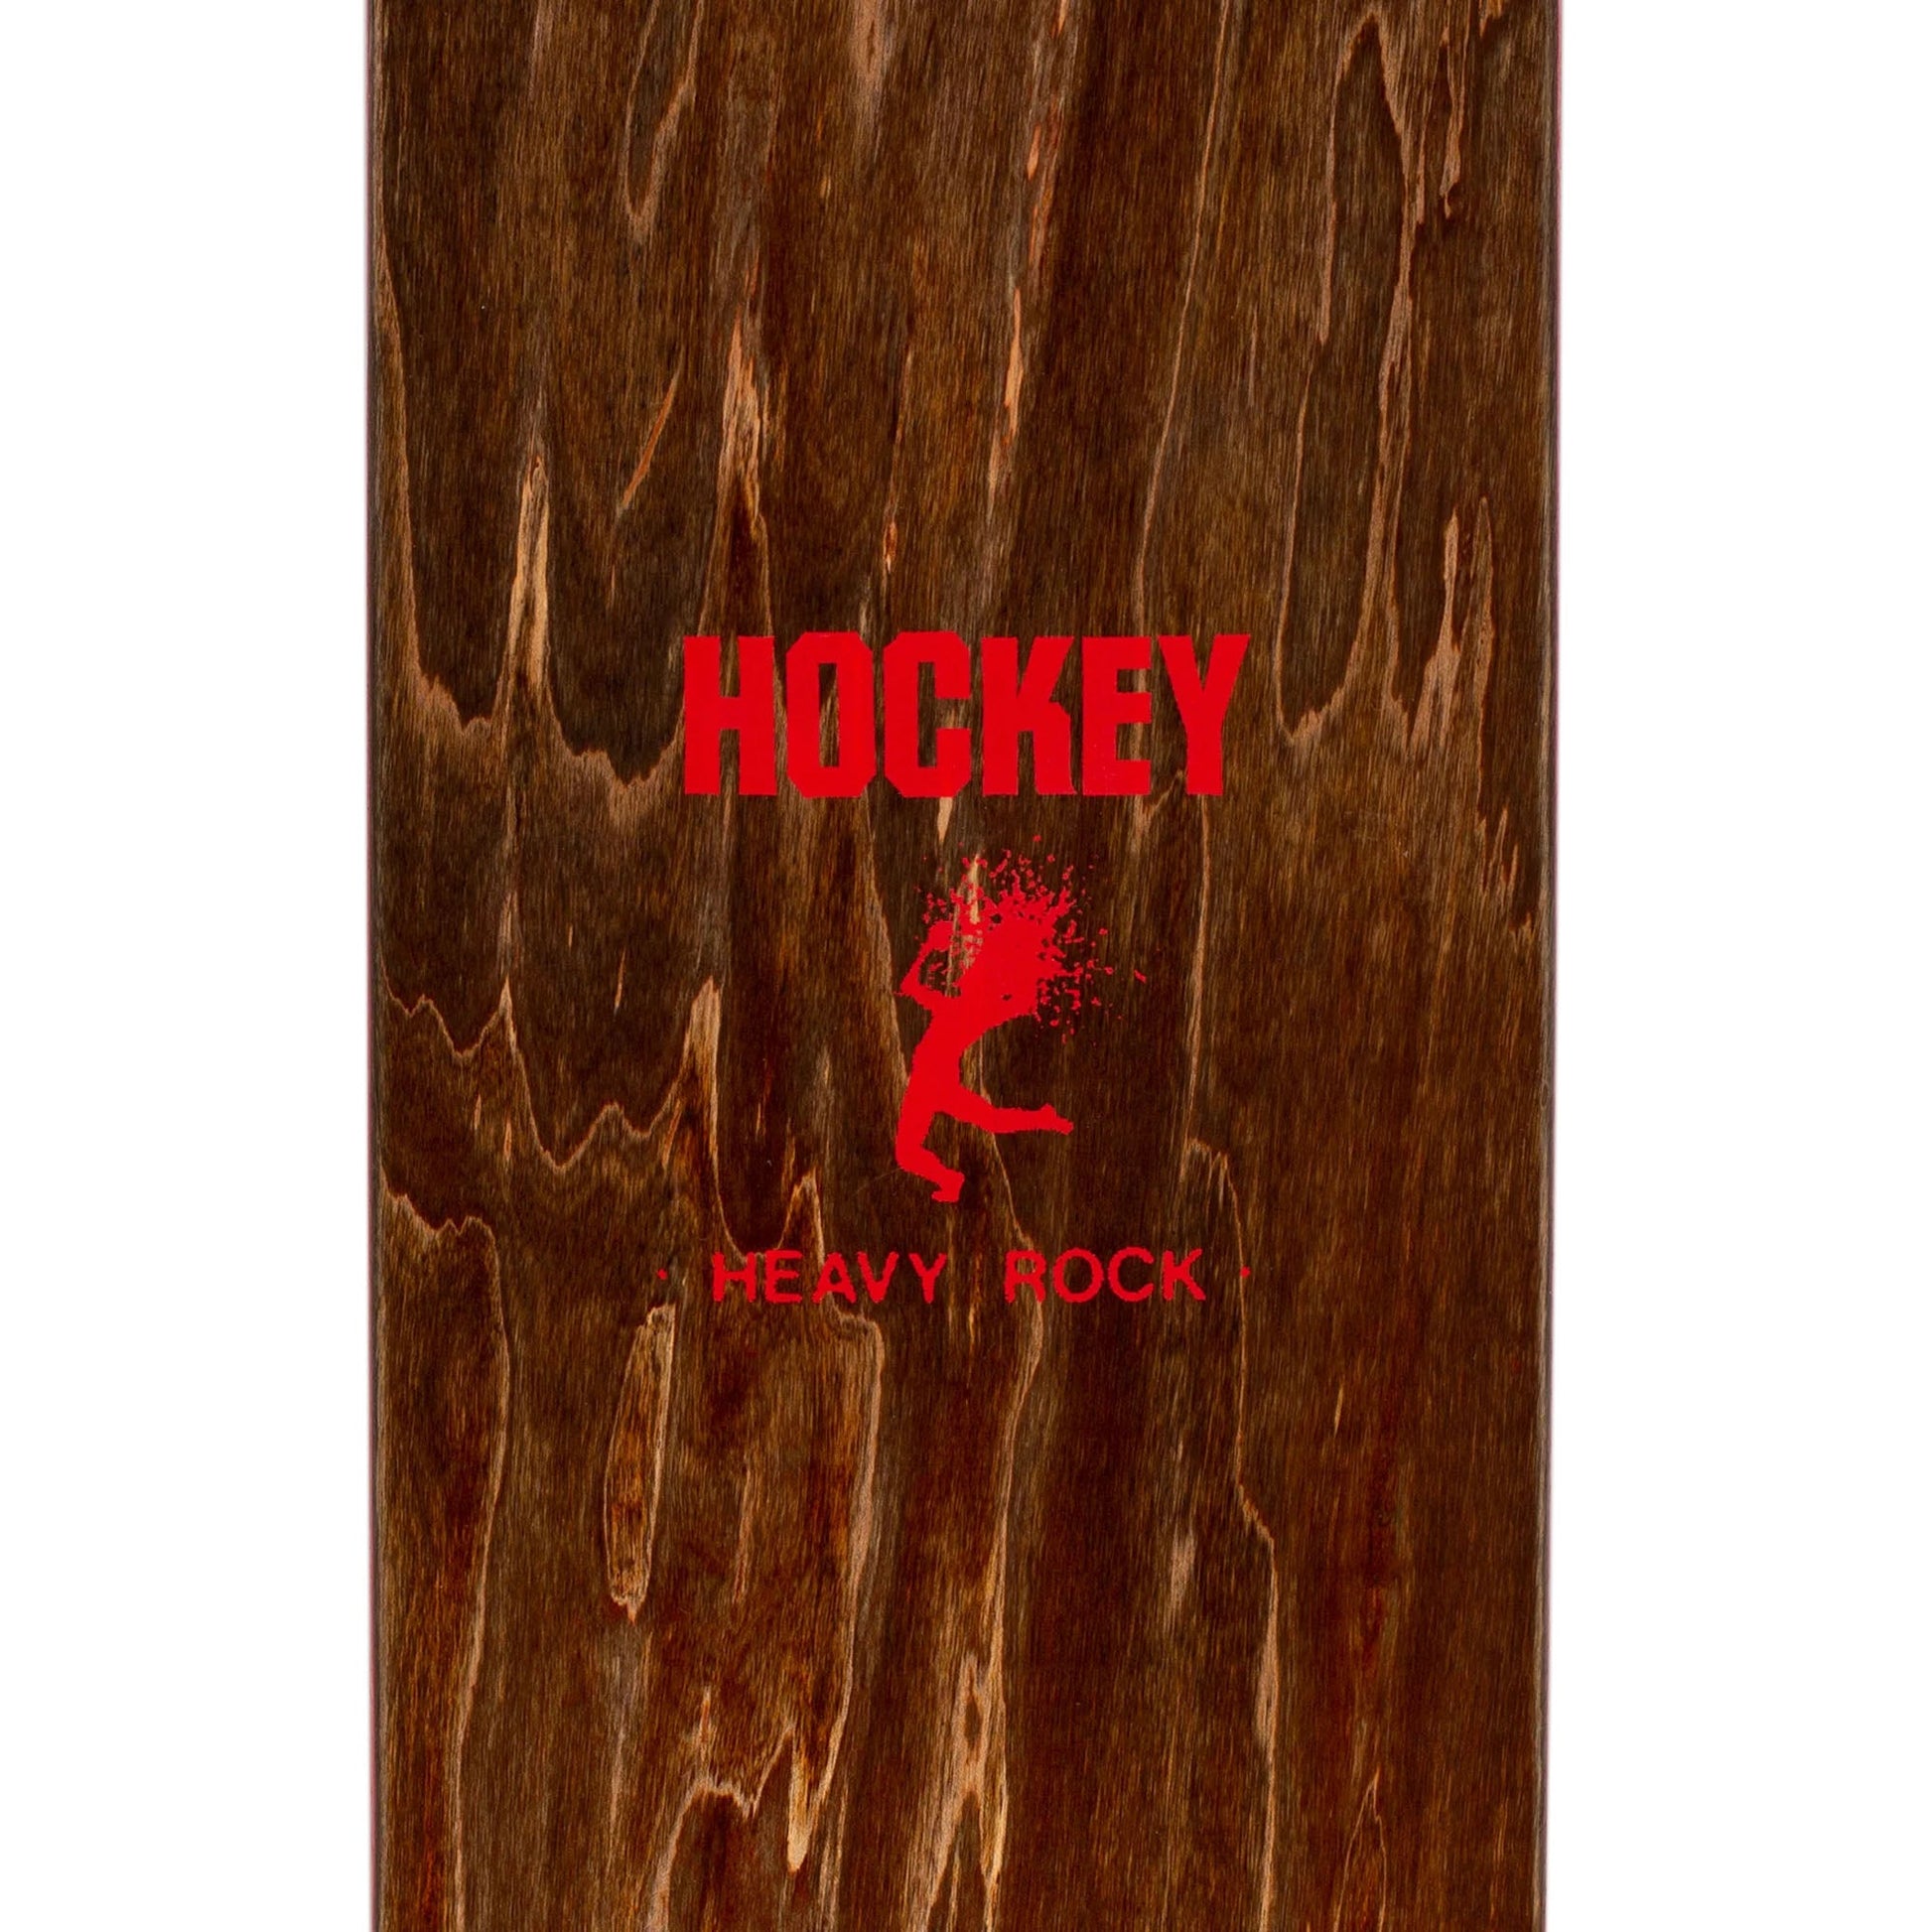 Hockey Heavy Rock Deck (8.0") - Tiki Room Skateboards - 2